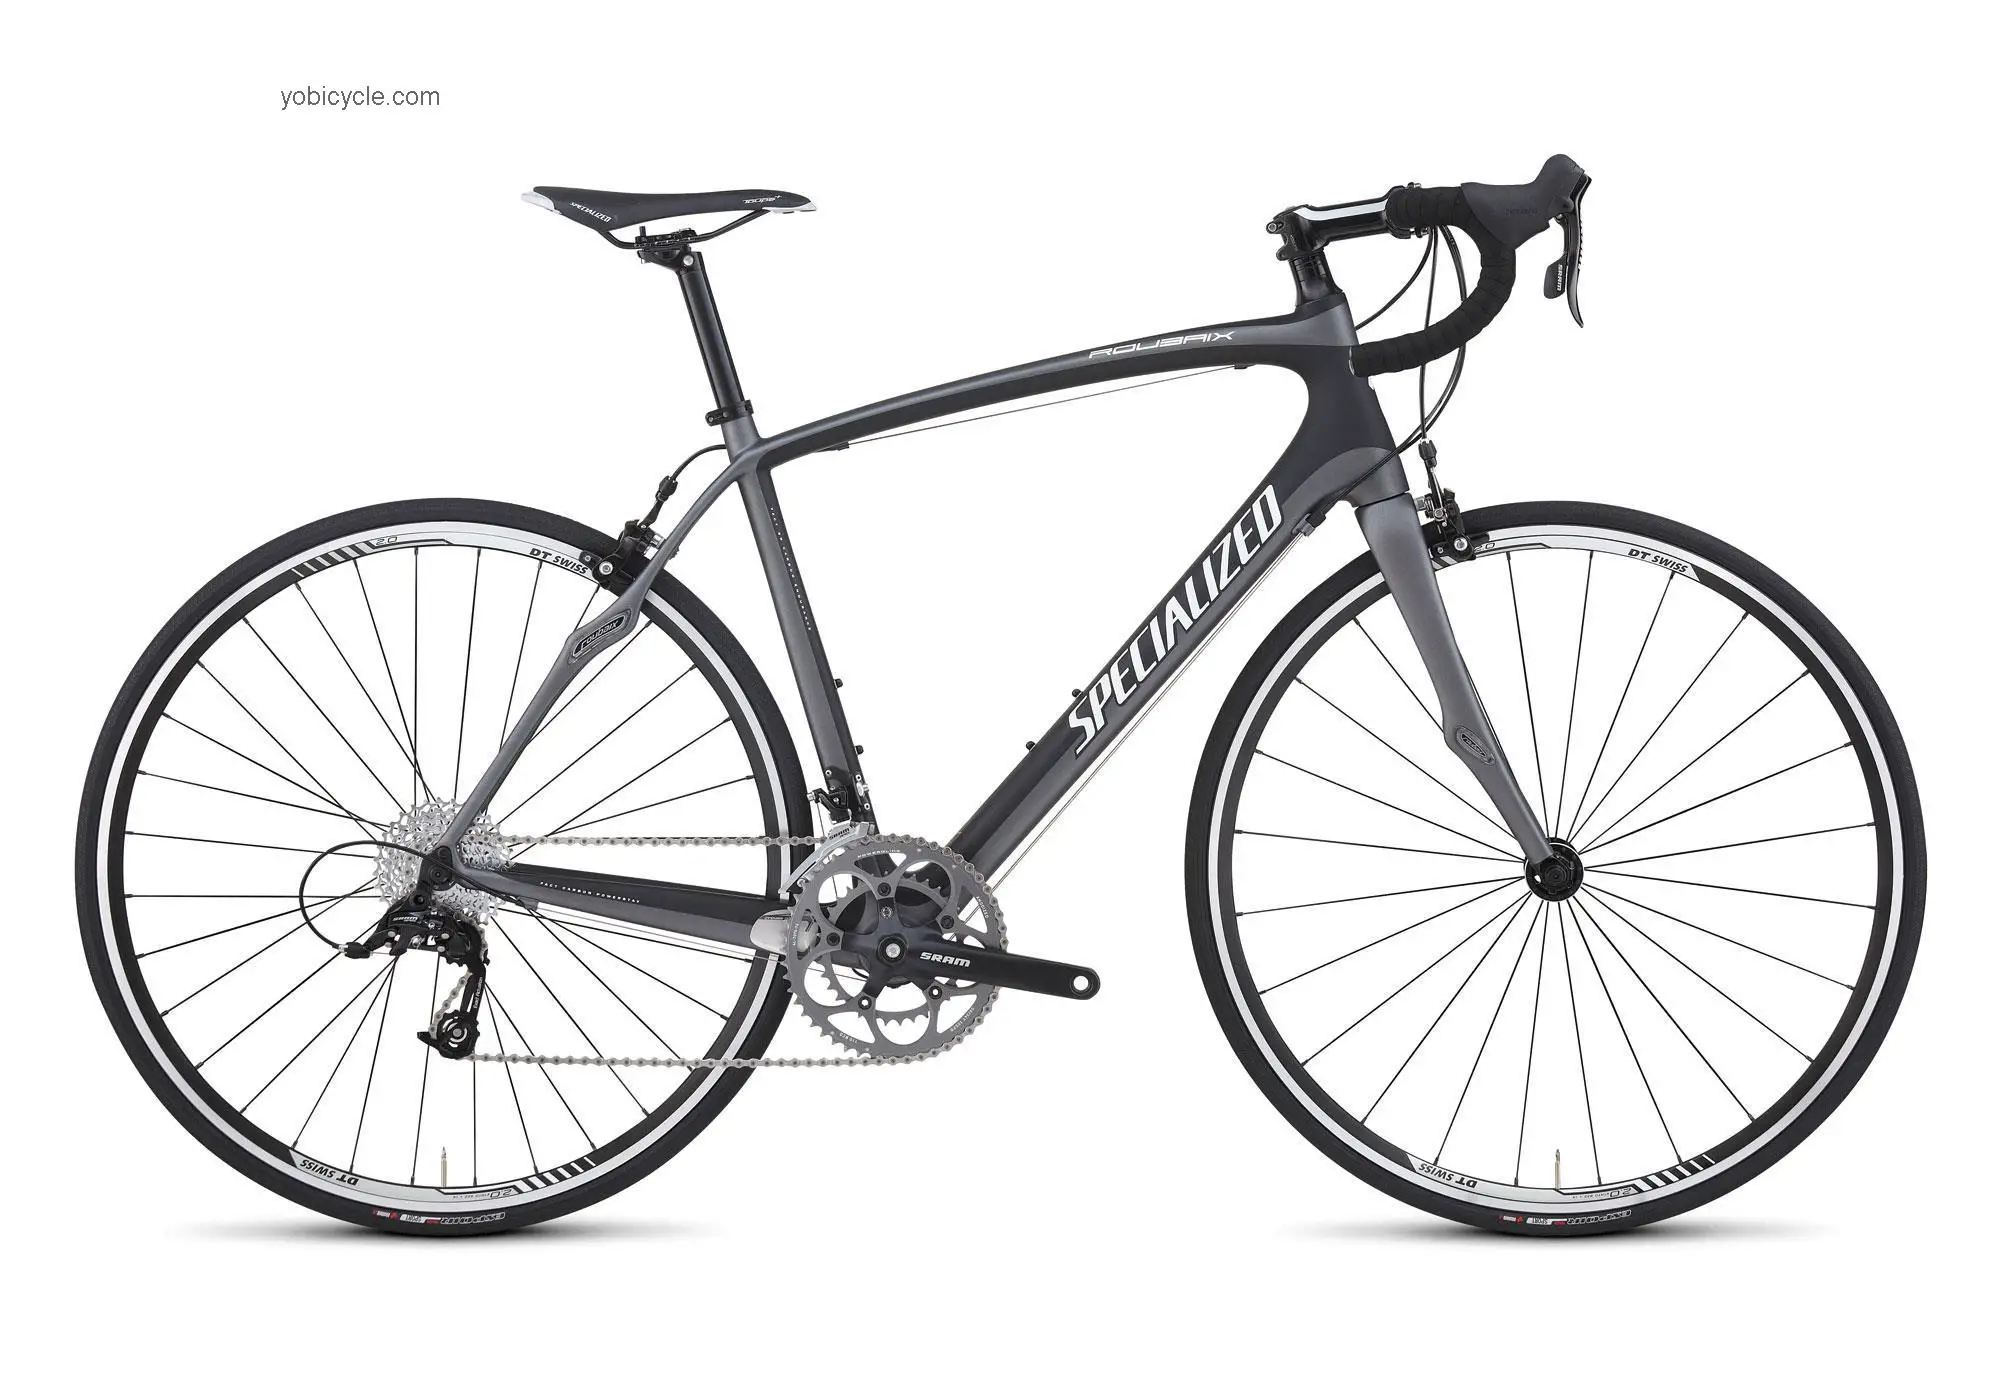 Specialized Roubaix Compact Apex 2012 comparison online with competitors